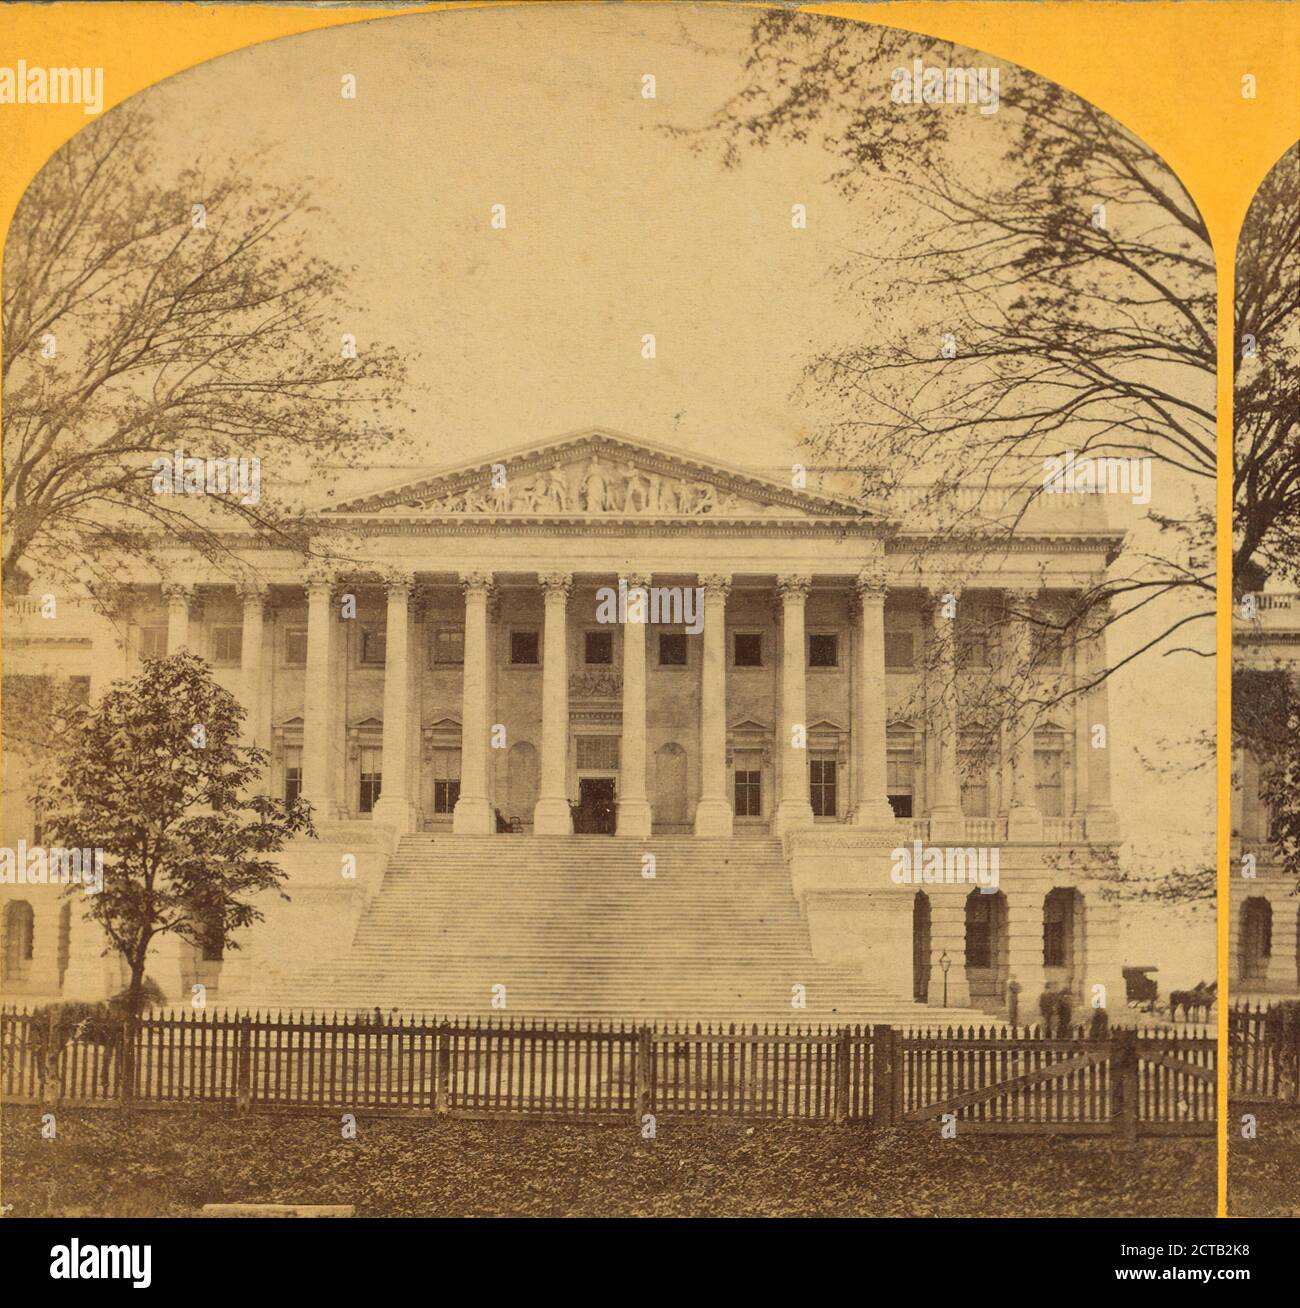 Senatsfront, Washington, D.C., Kilburn Brothers, Vereinigte Staaten. Kongress. Senat, 1872, Washington (D.C.), Vereinigte Staaten Stockfoto